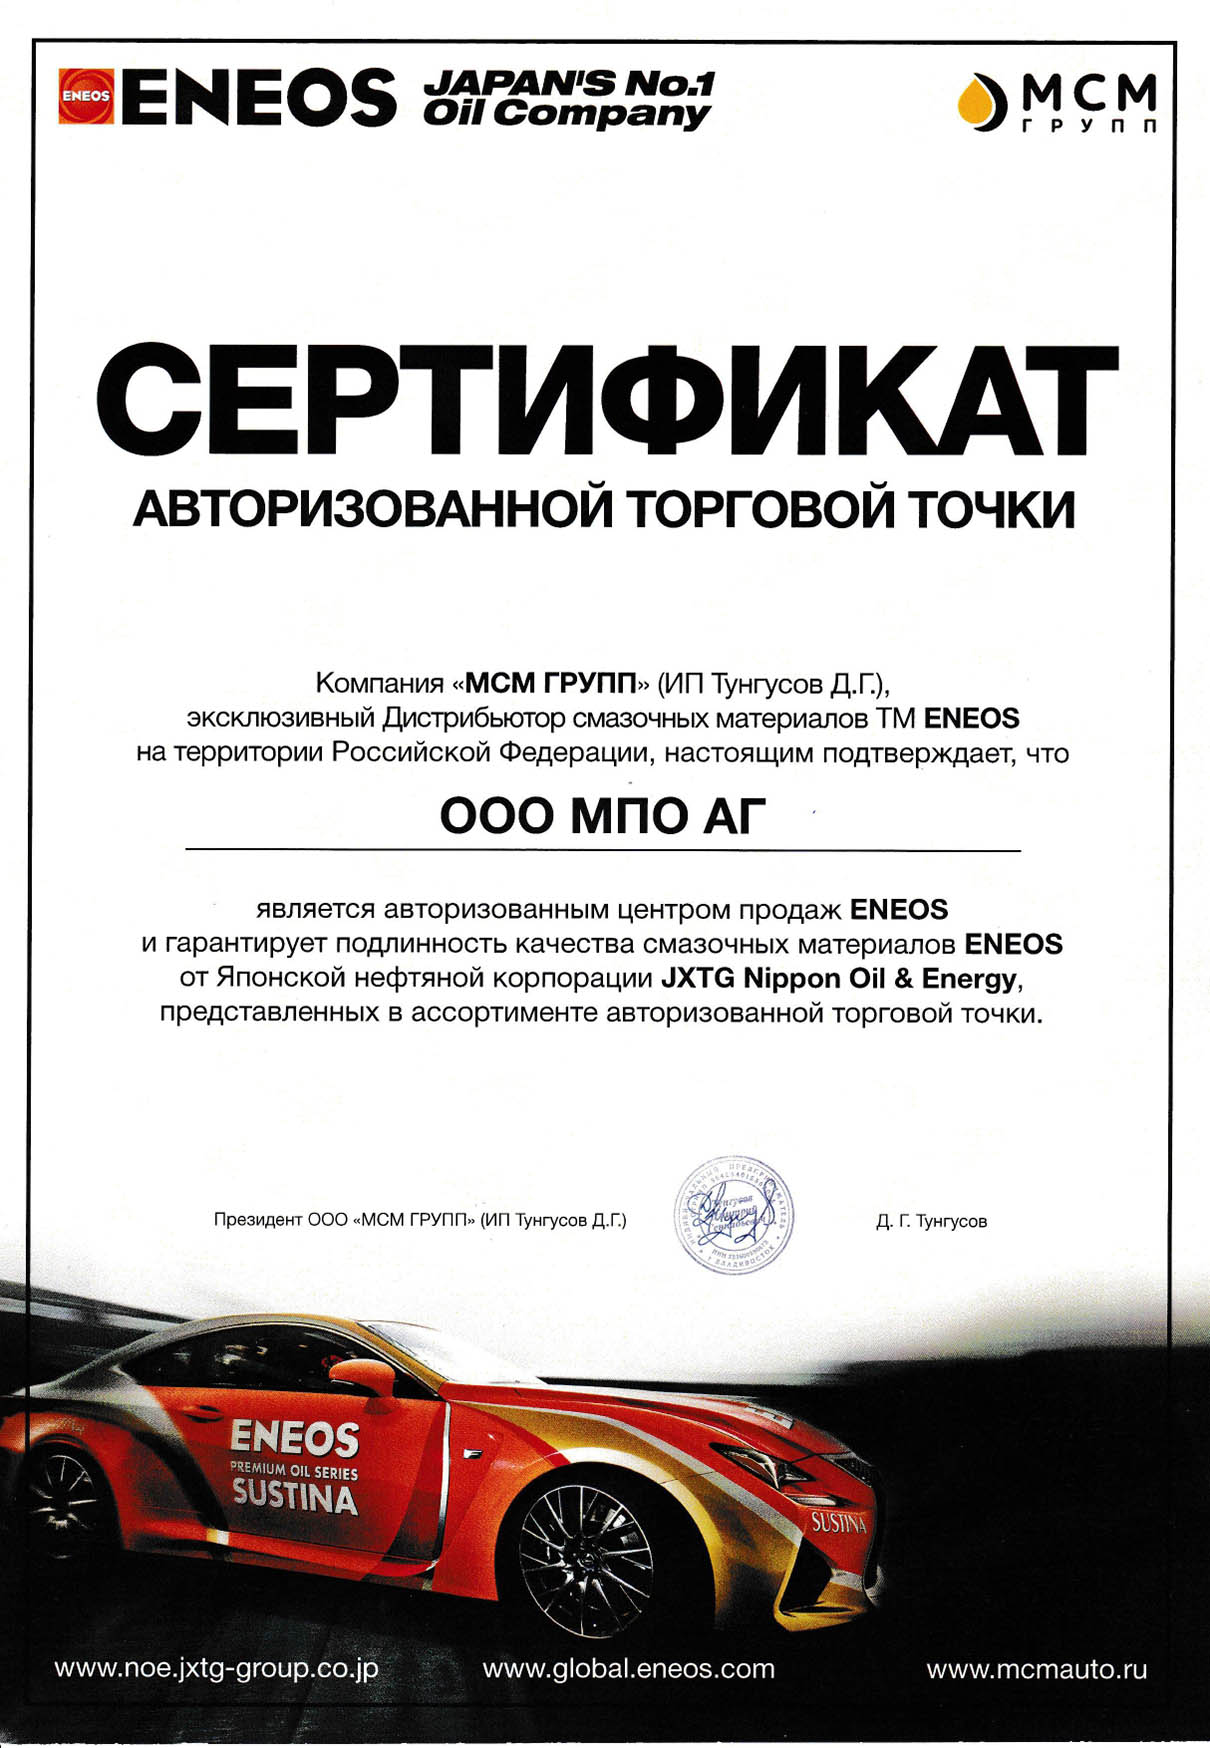 Сертификат Eneos